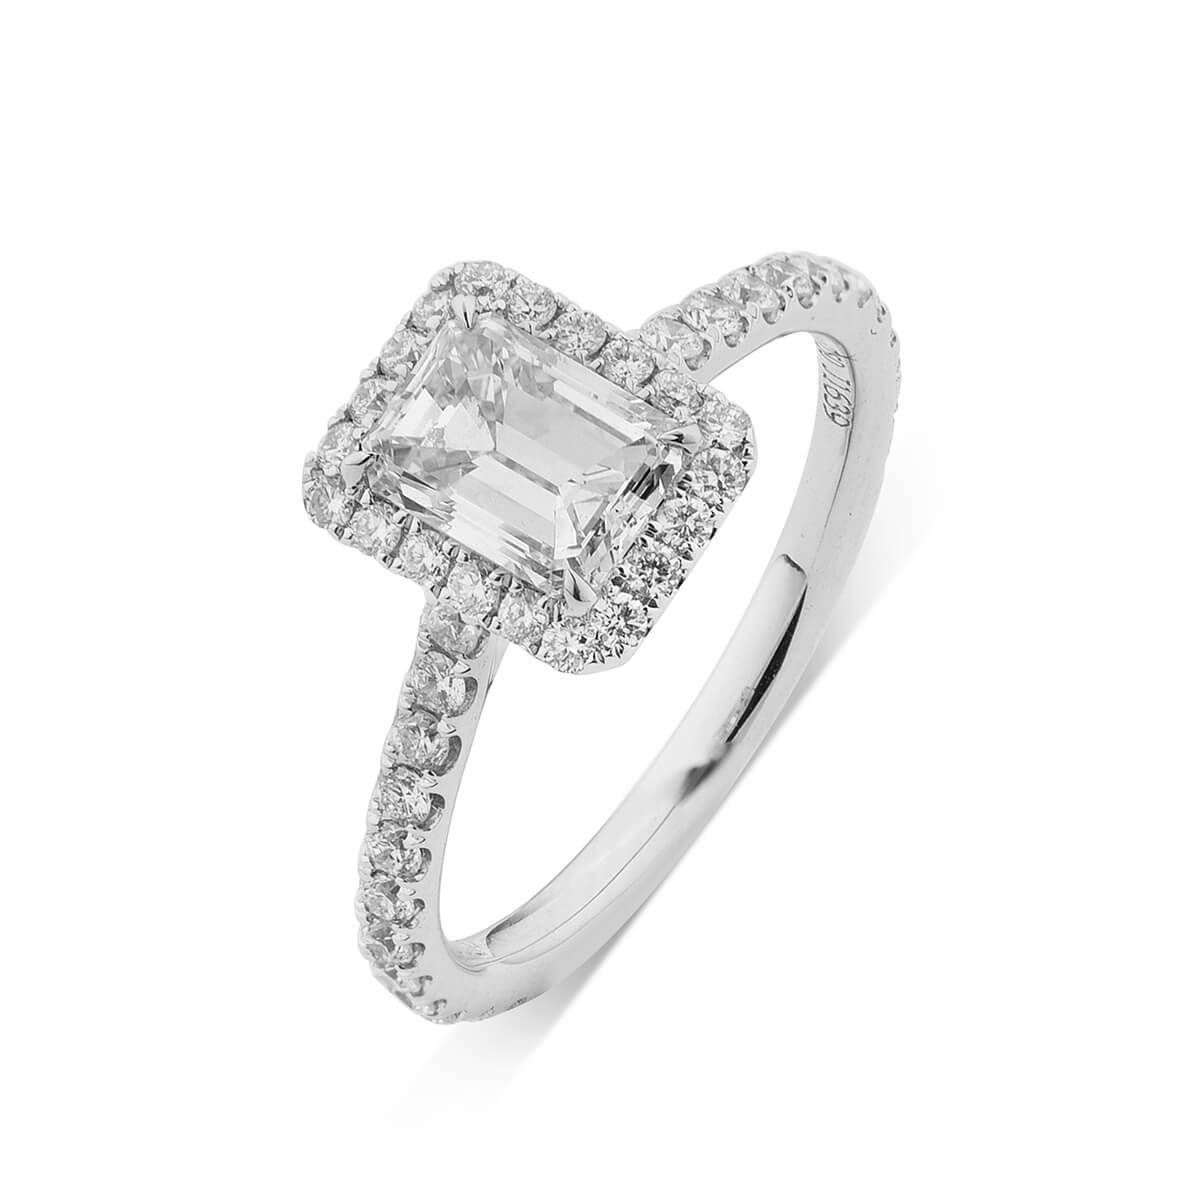  White Diamond Ring, 1.01 Ct. (1.51 Ct. TW), Emerald shape, GIA Certified, 6225859552